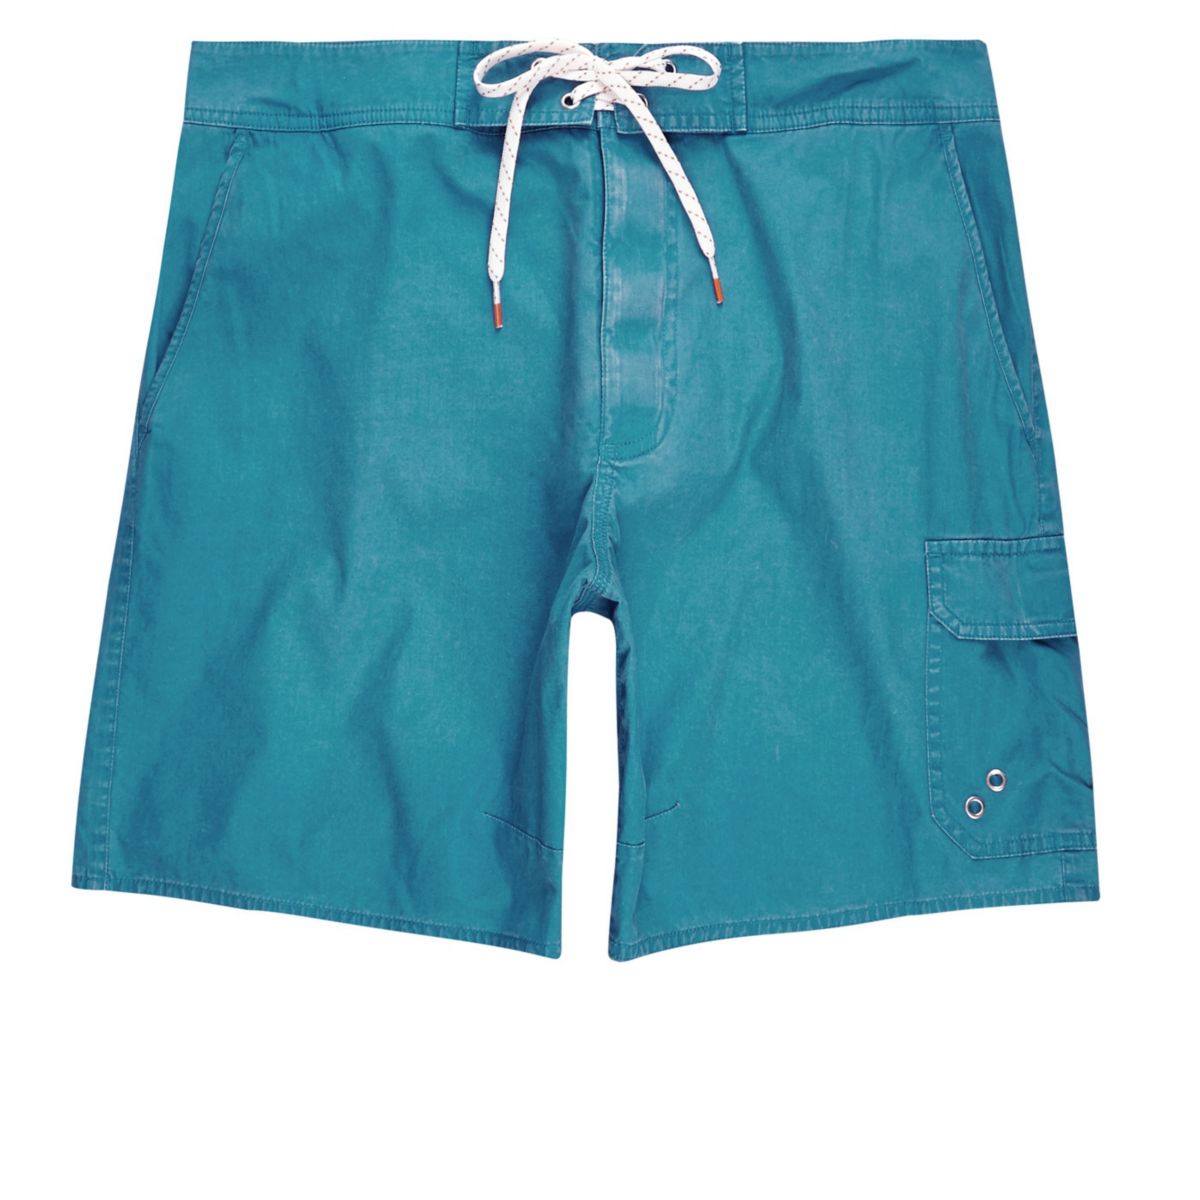 Blue acid wash swim shorts - Shorts - Sale - men